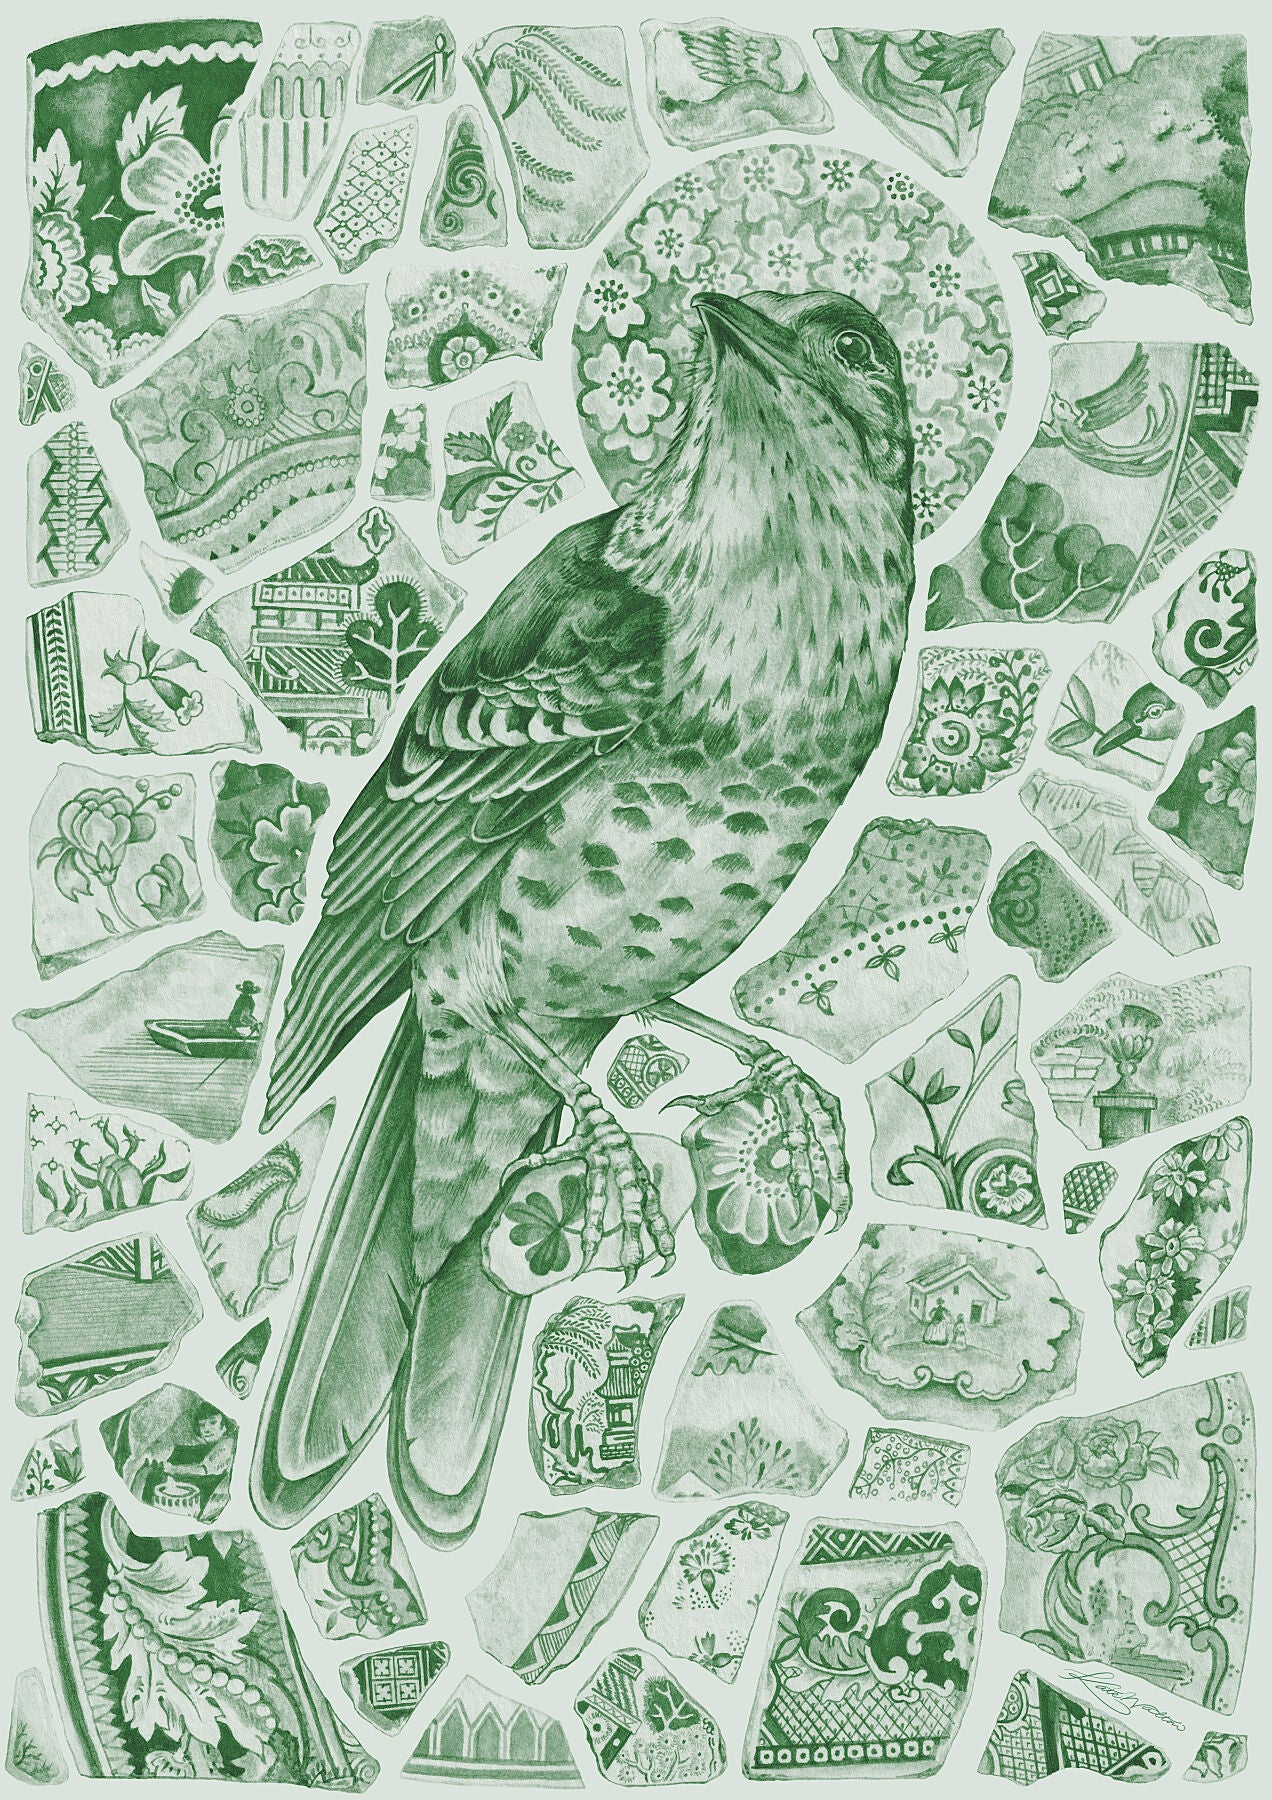 Giclée print, high quality print, hand painted, carbon neutral, ethical, ethical art, bird painting, bird print, artwork, independent artist